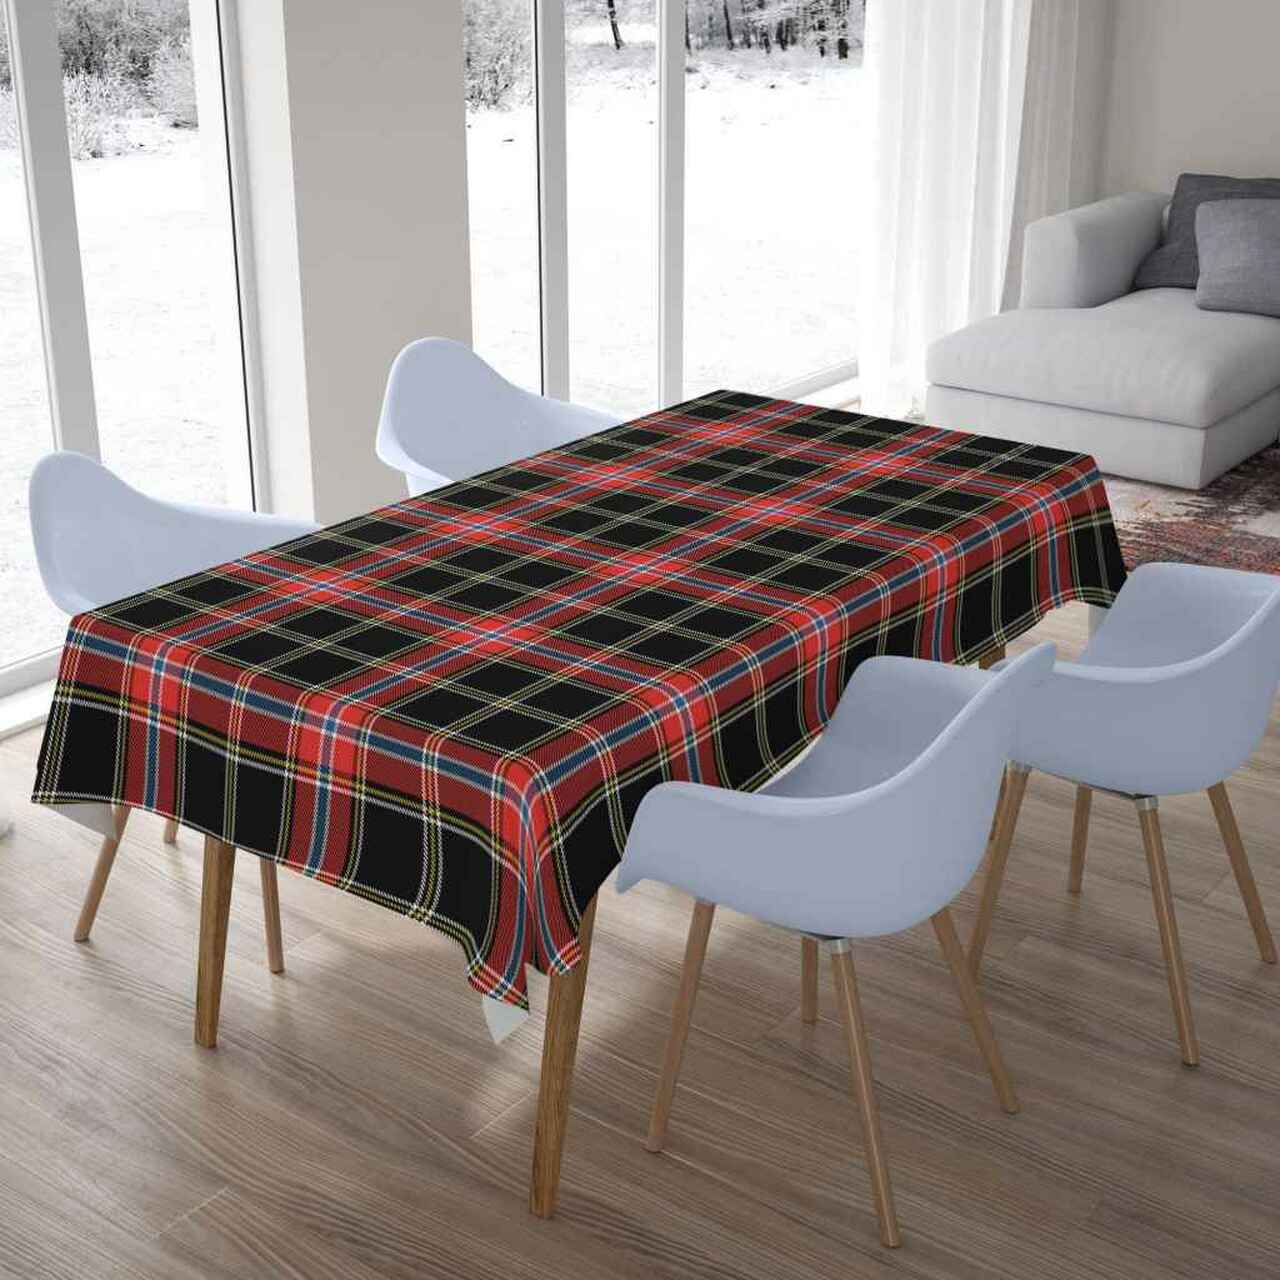 Norwegian Night Tartan Tablecloth